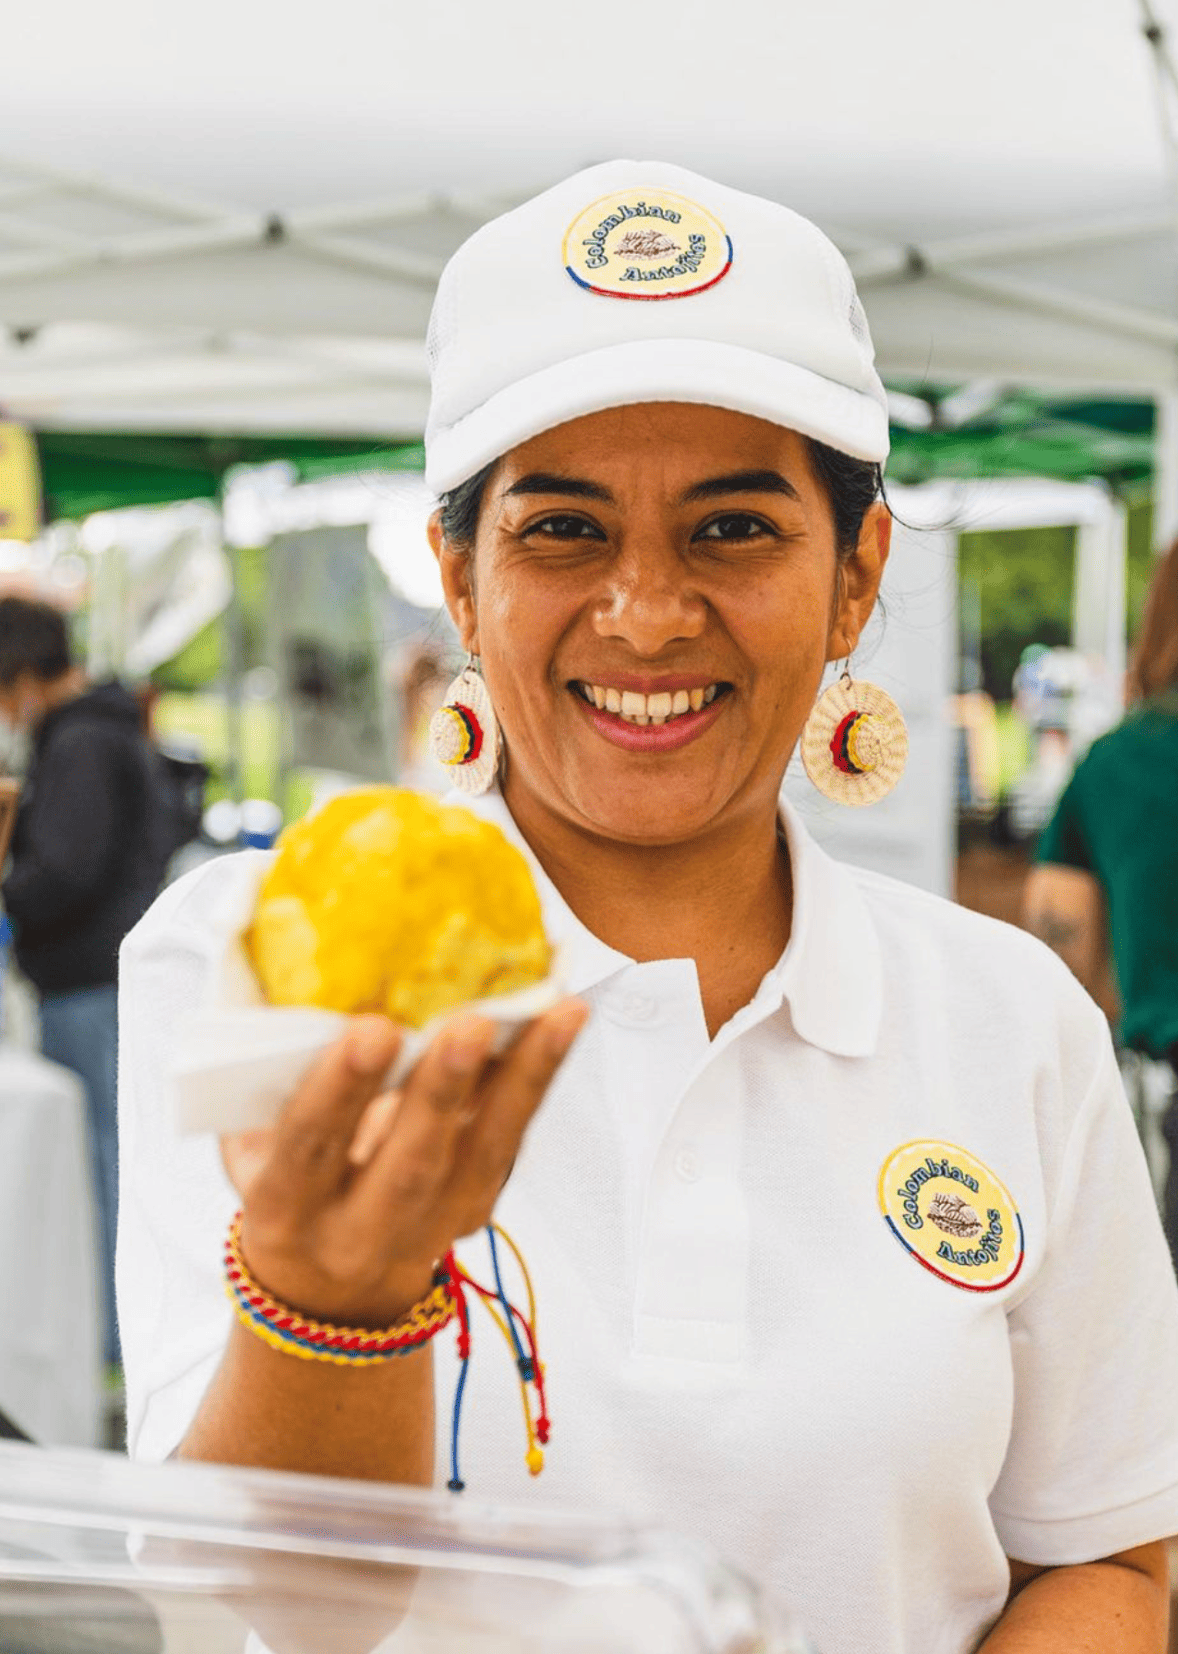 A Dream Cuisines program participant representing her food business at a market